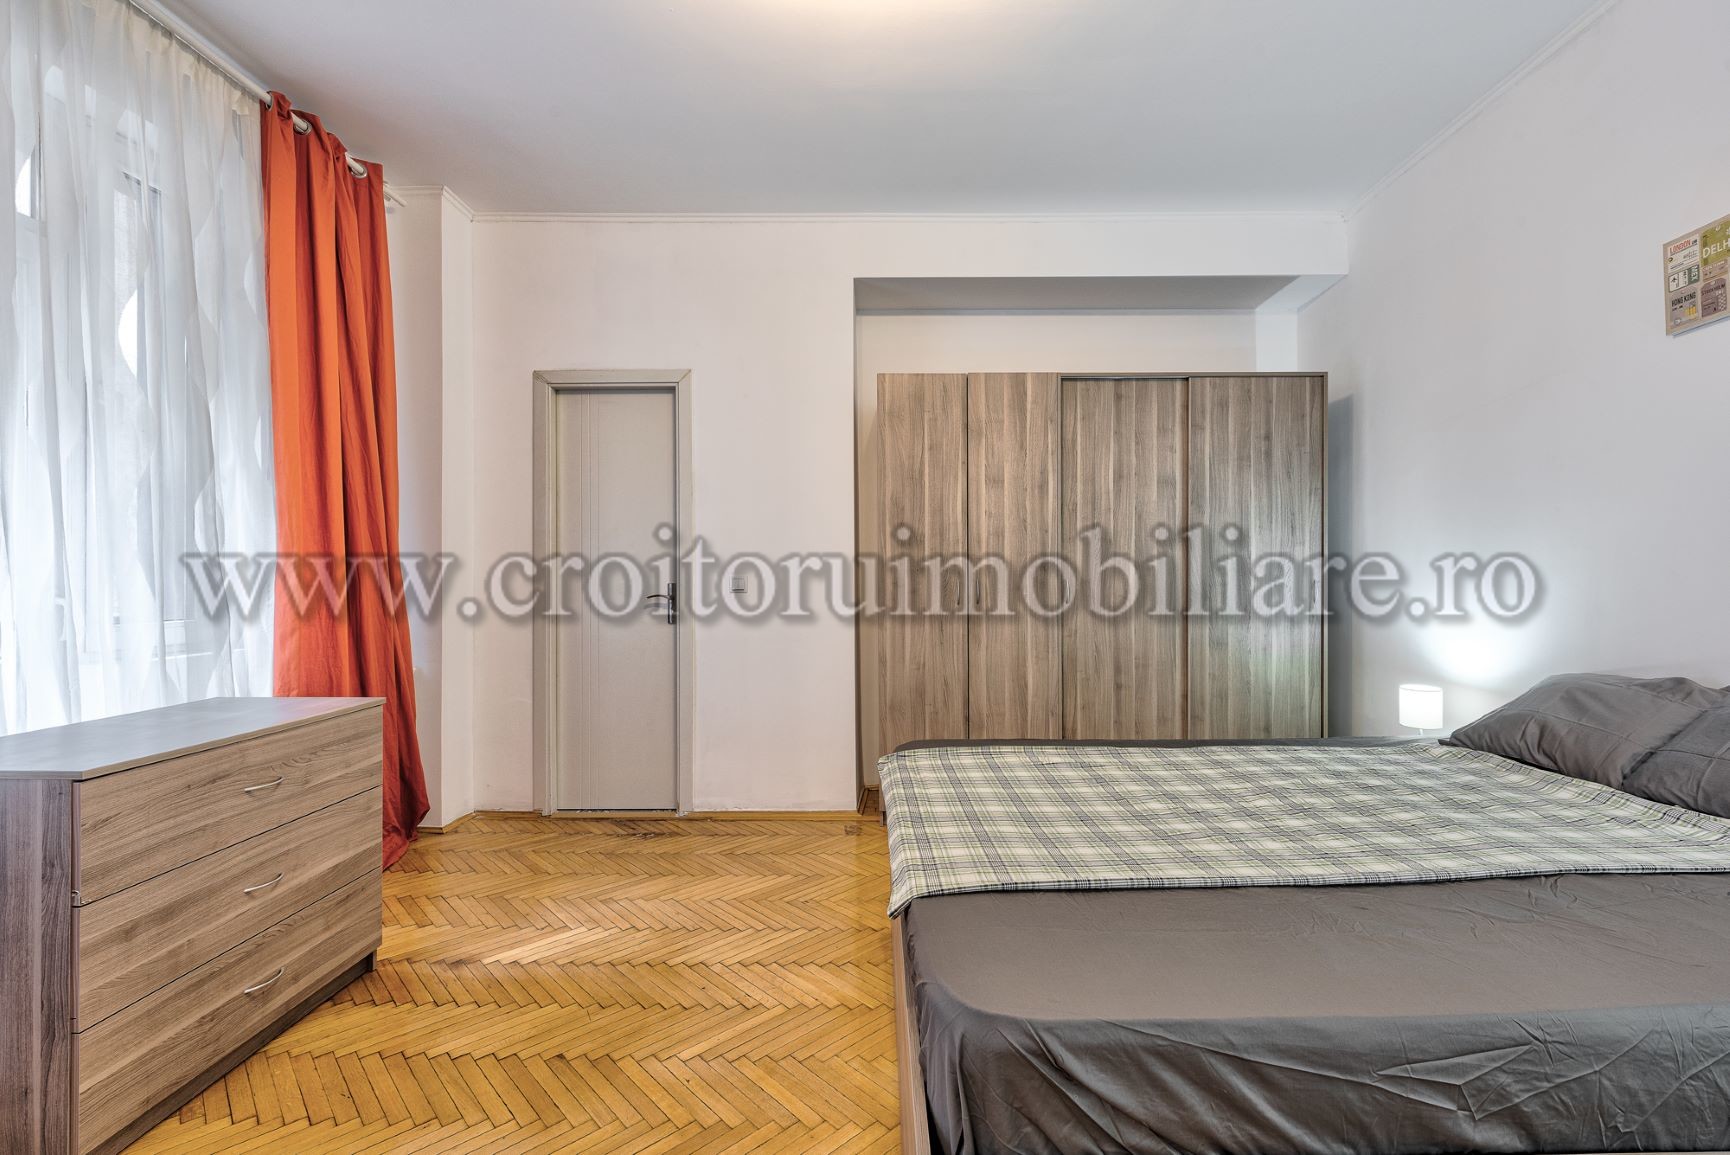 CENTRAL! Oferta inchiriere apartament 2 camere Piata Romana – Metrou